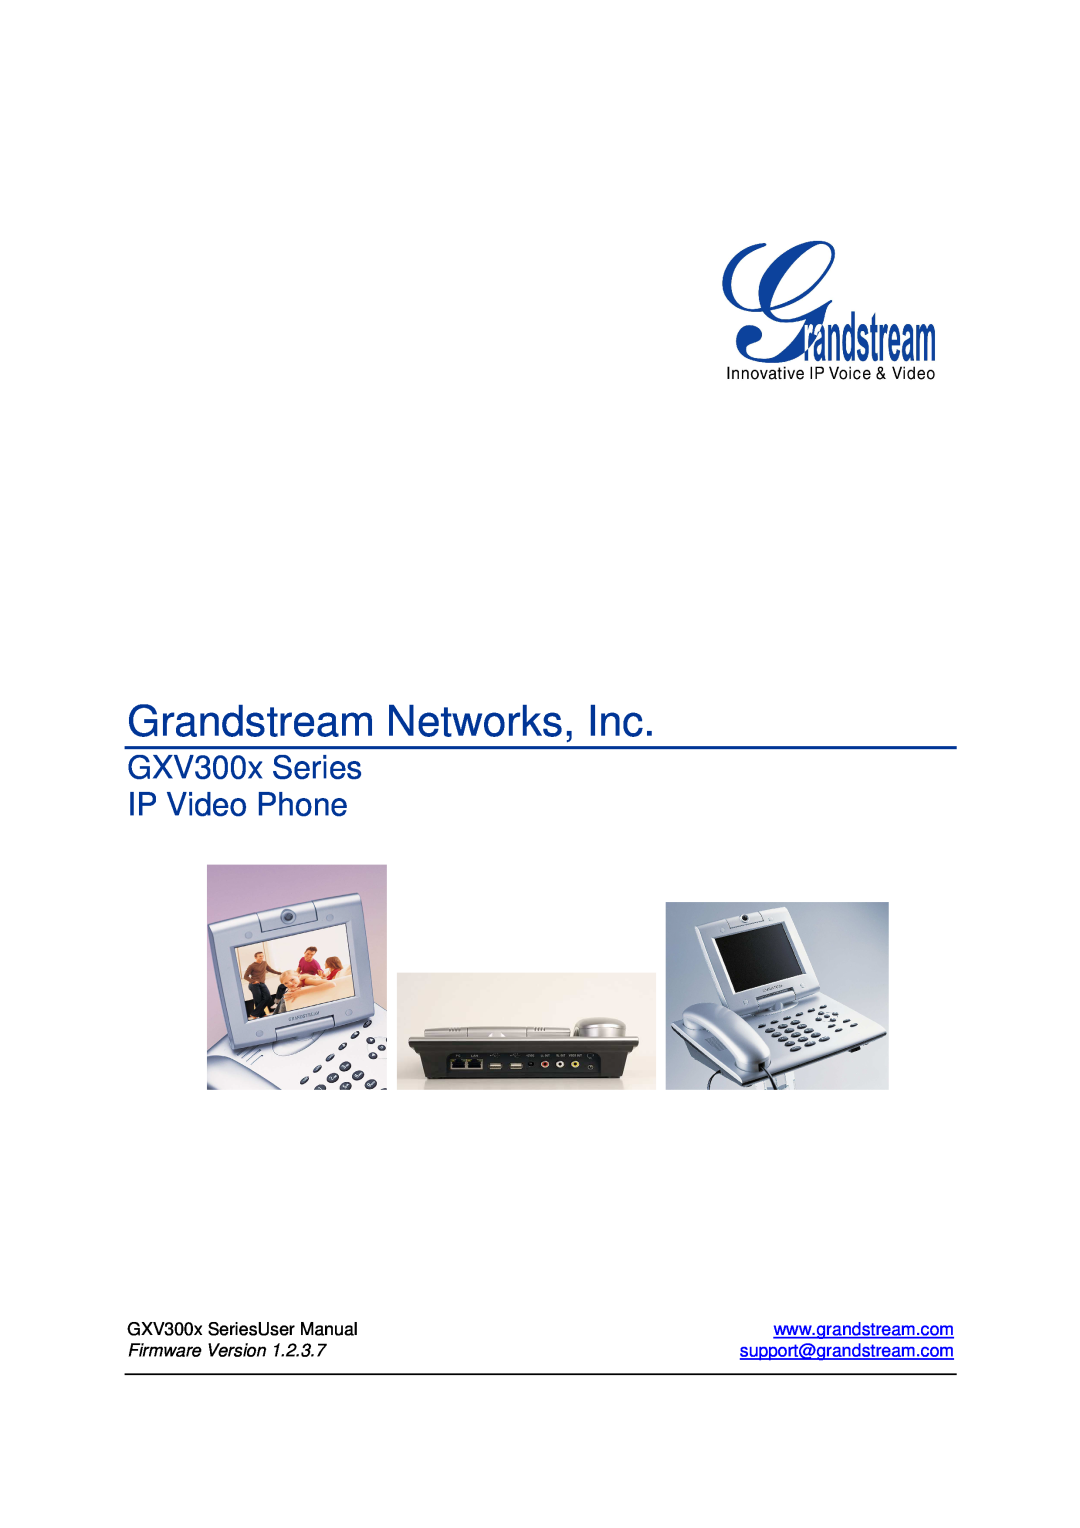 Grandstream Networks GXV300X manual Firmware Version, Grandstream Networks, Inc, GXV300x Series IP Video Phone 